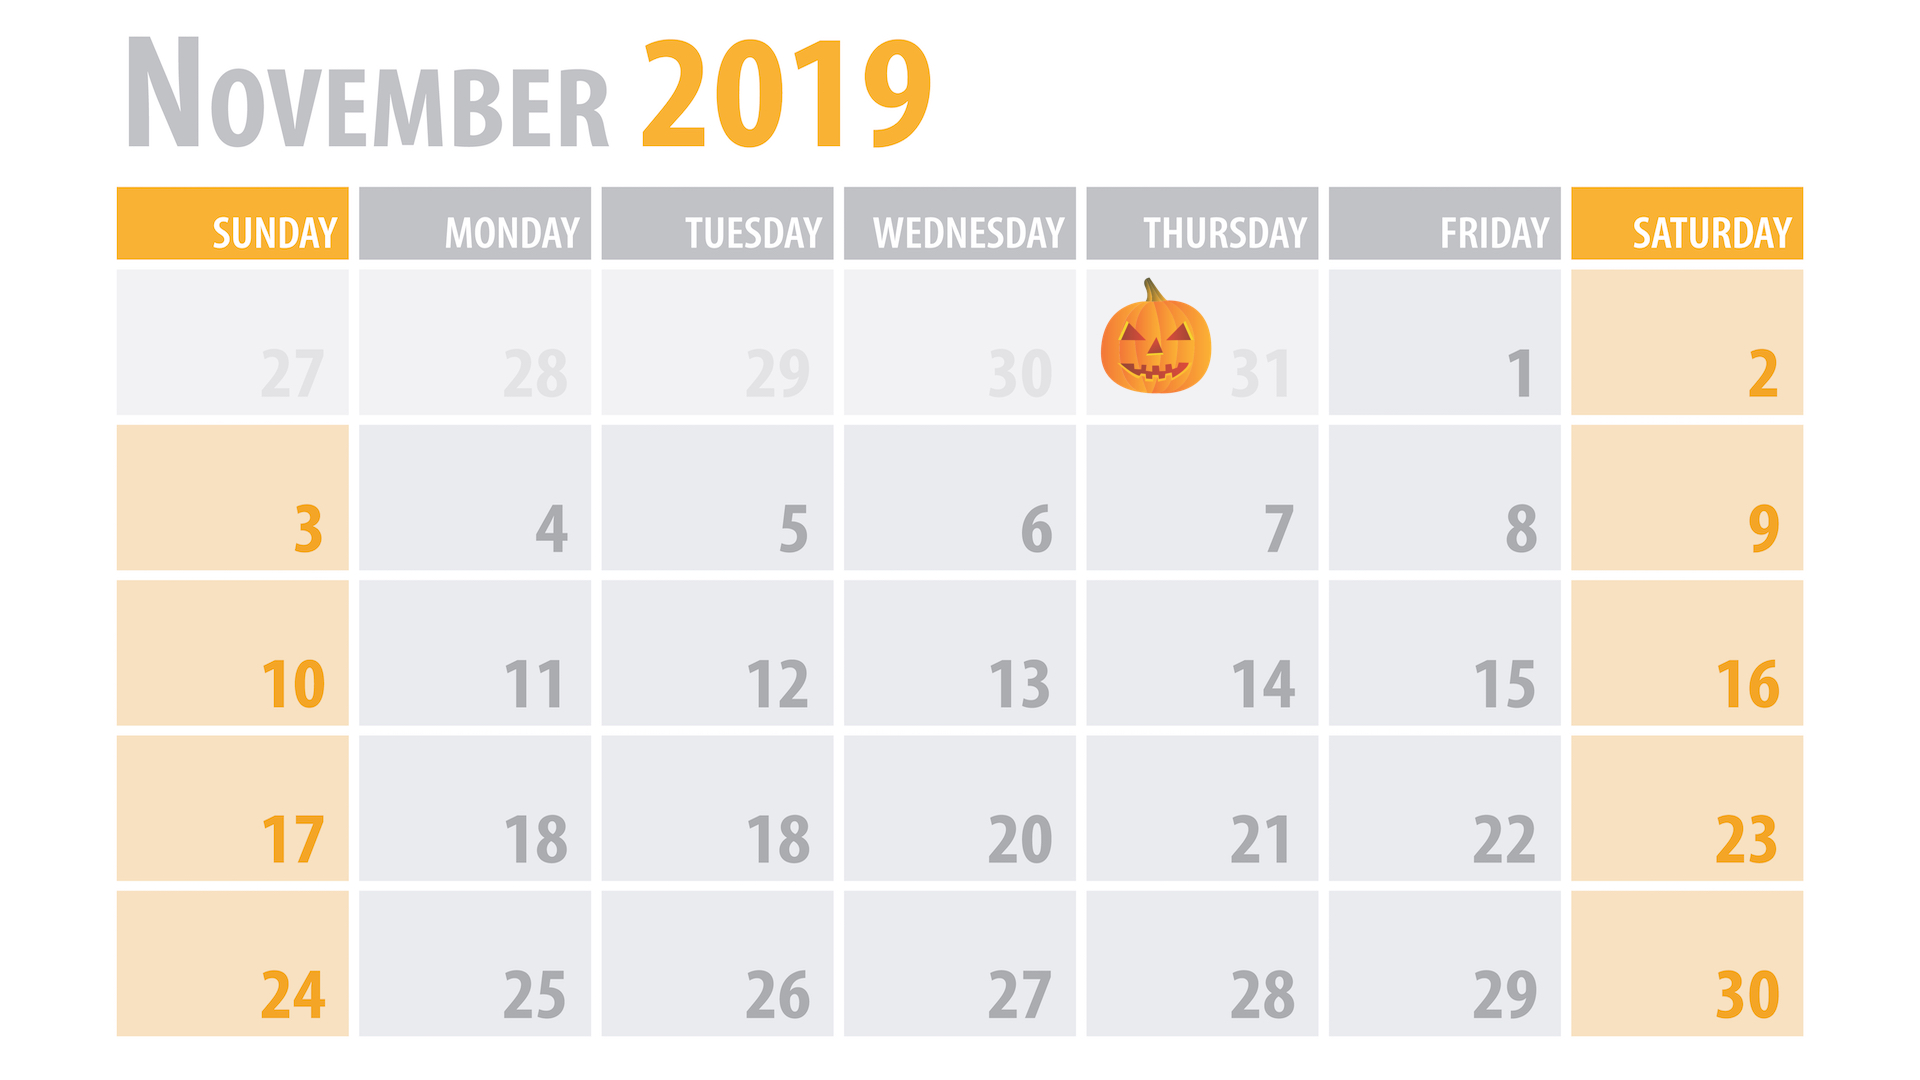 November 2019 calendar page